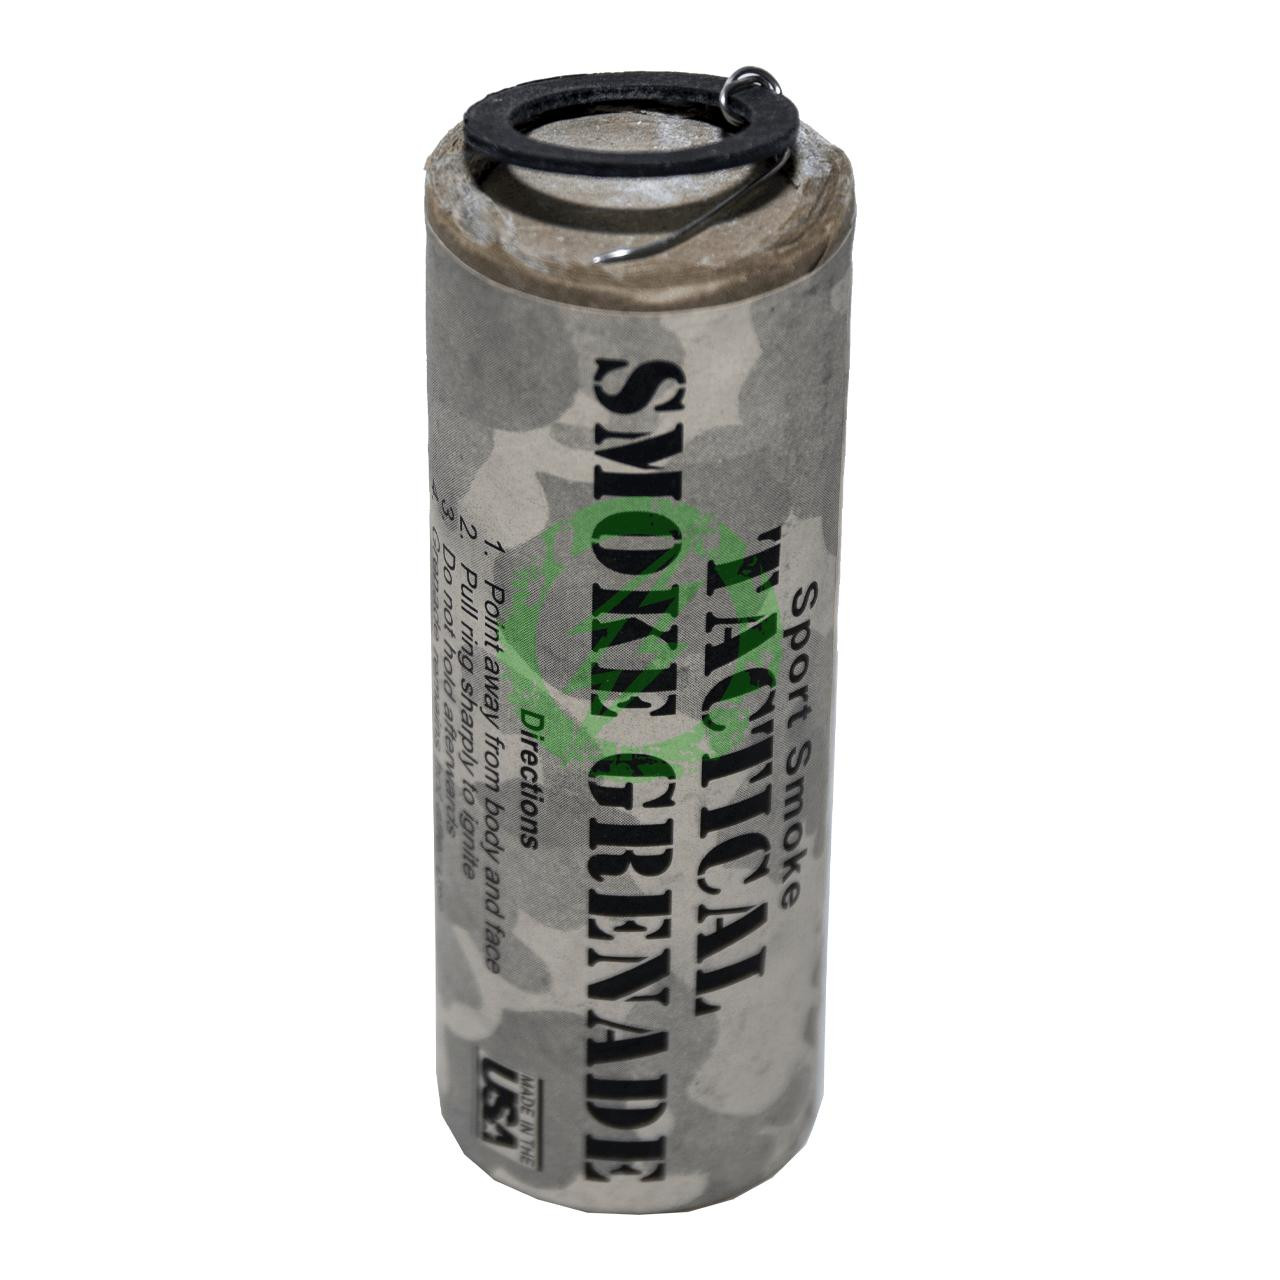  Sport Smoke Tactical Smoke Grenade | White | Event/Store Pickup 